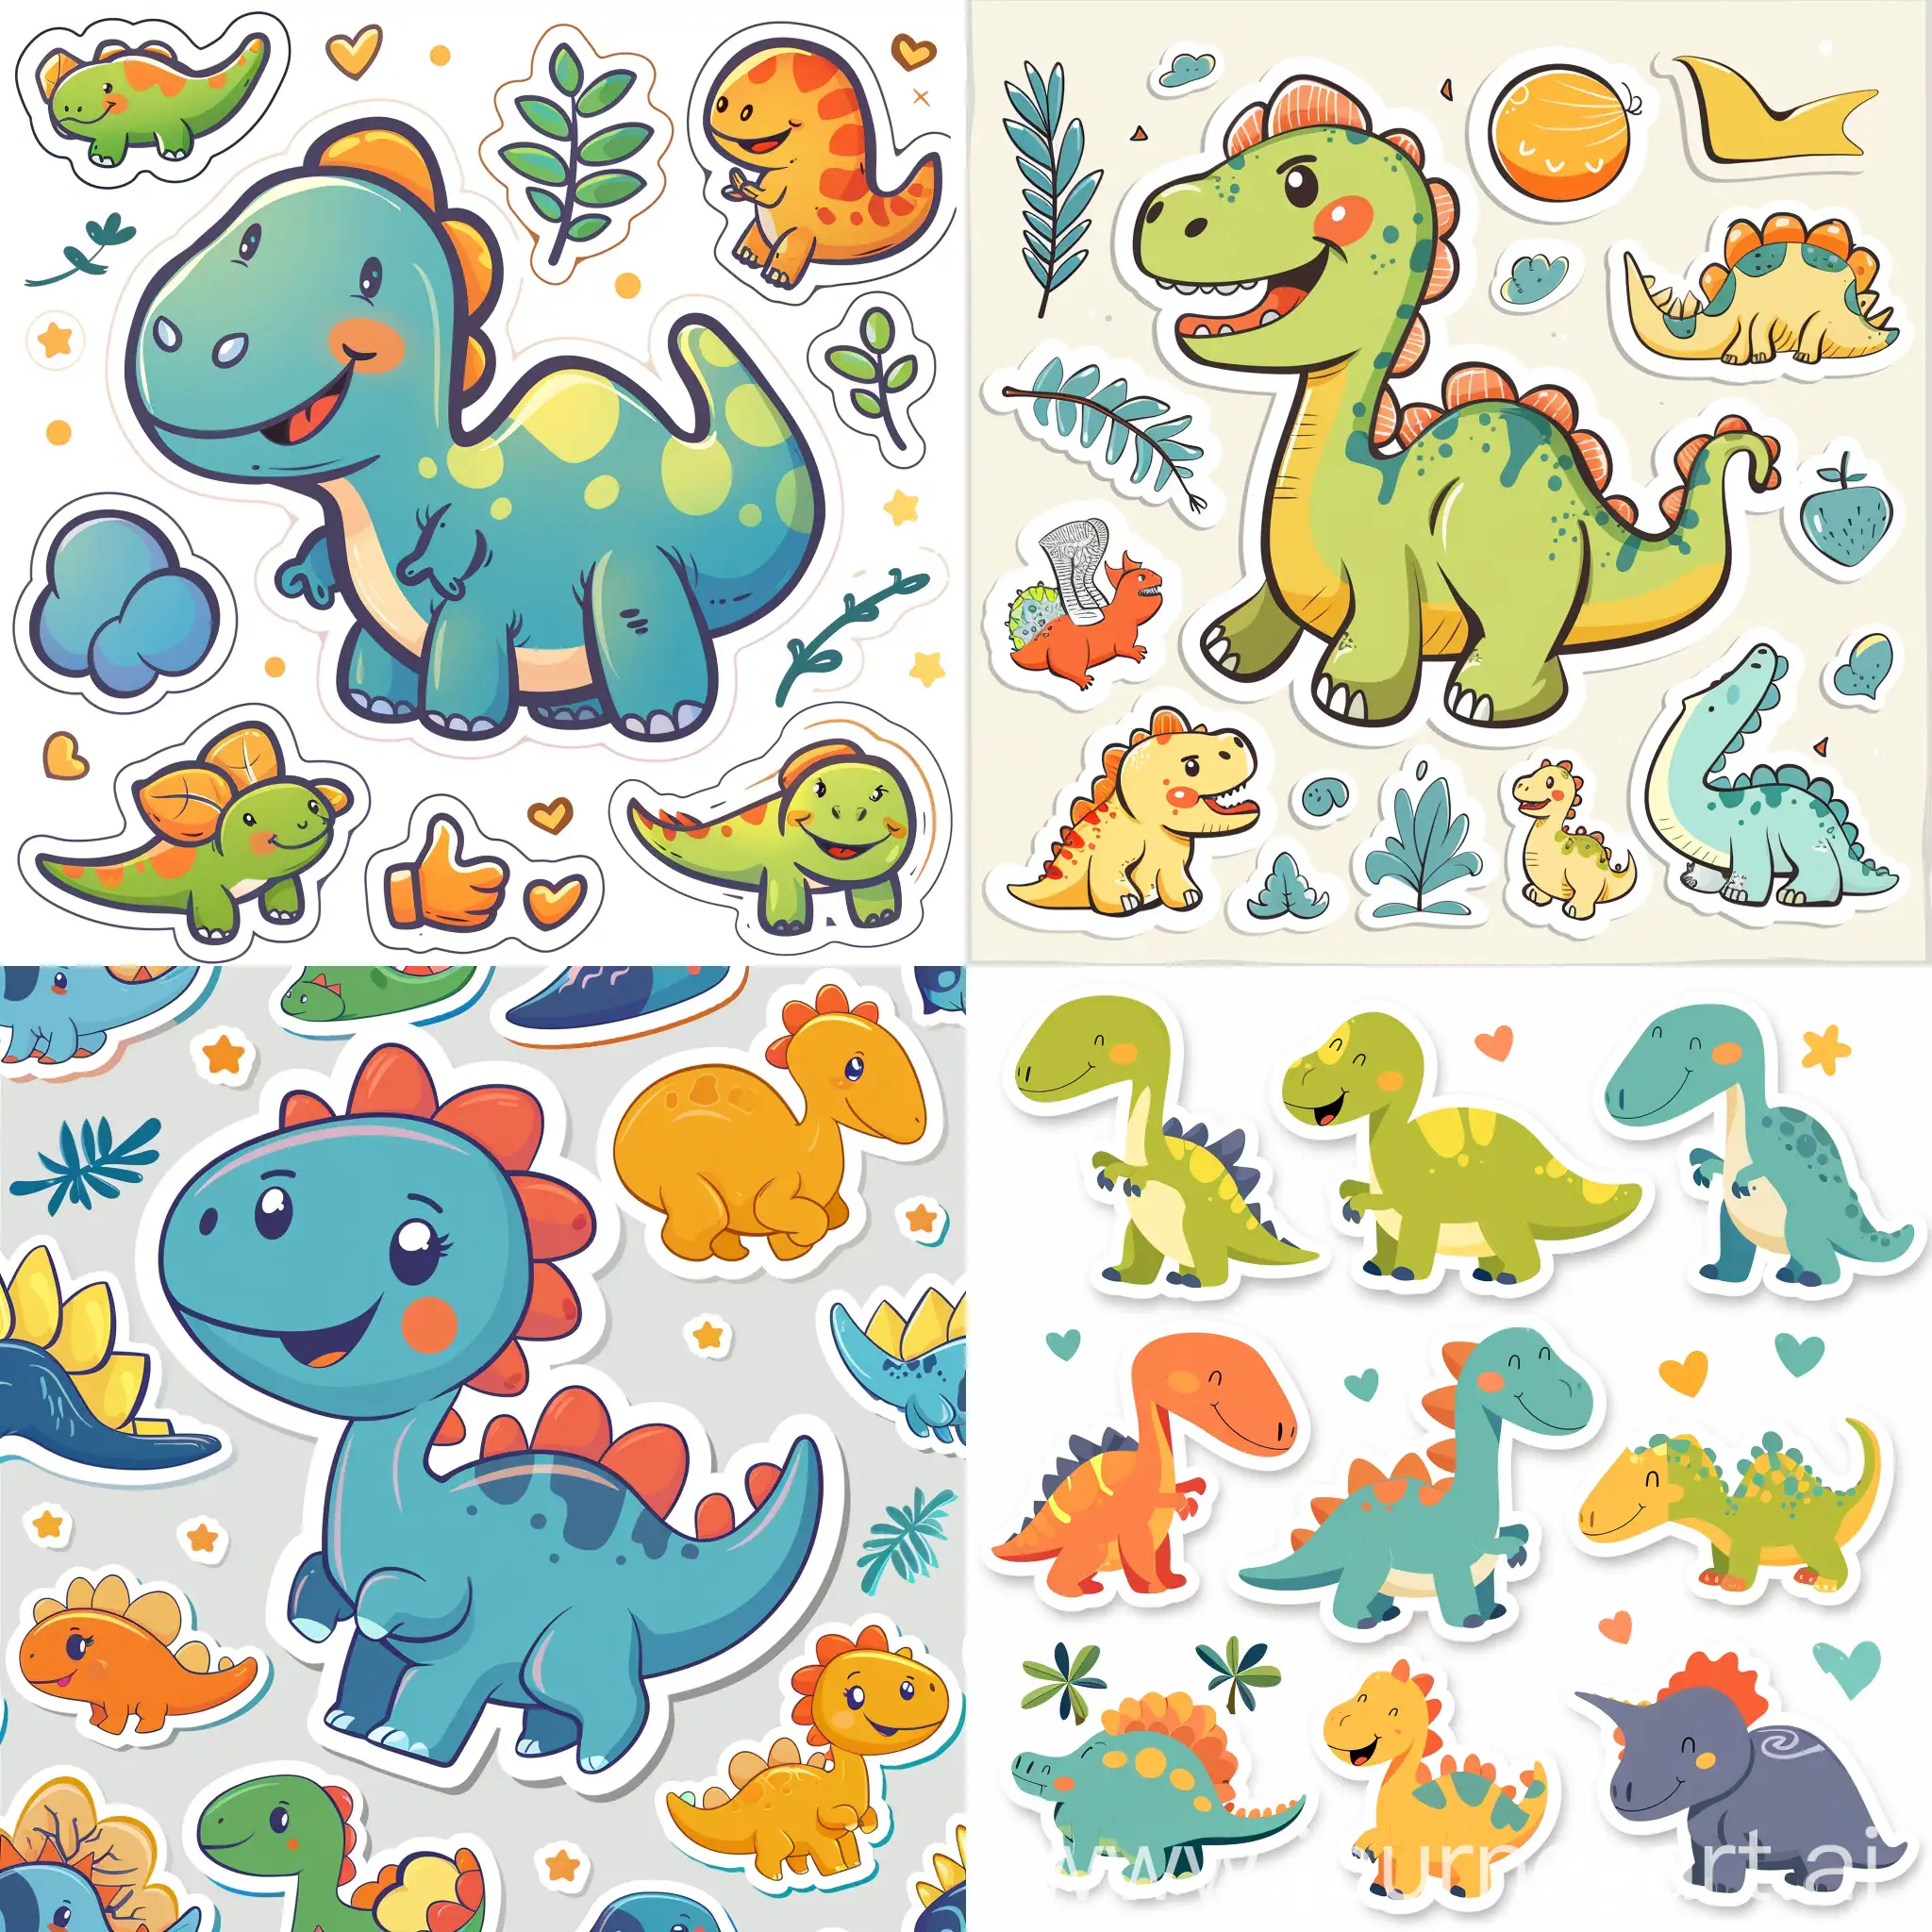  social media sticker pack with happy baby dinosaur